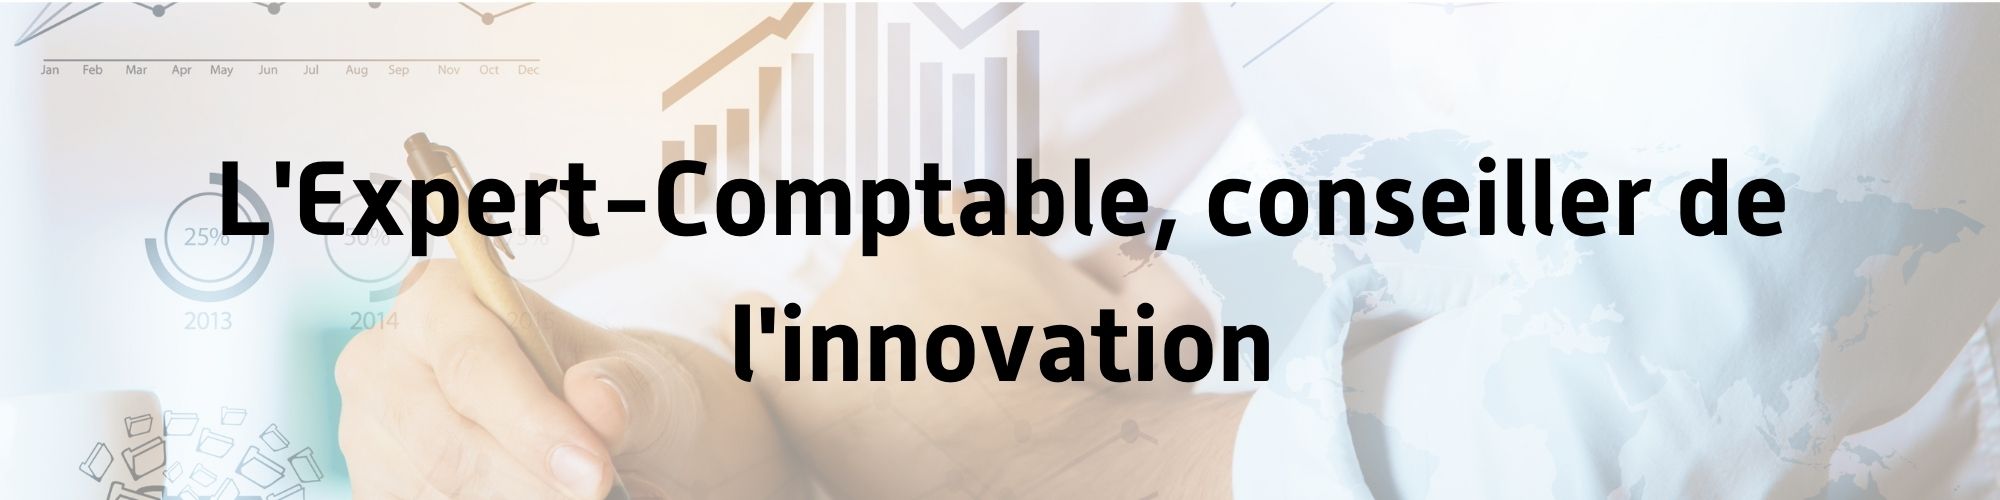 expert_comptable_innovation